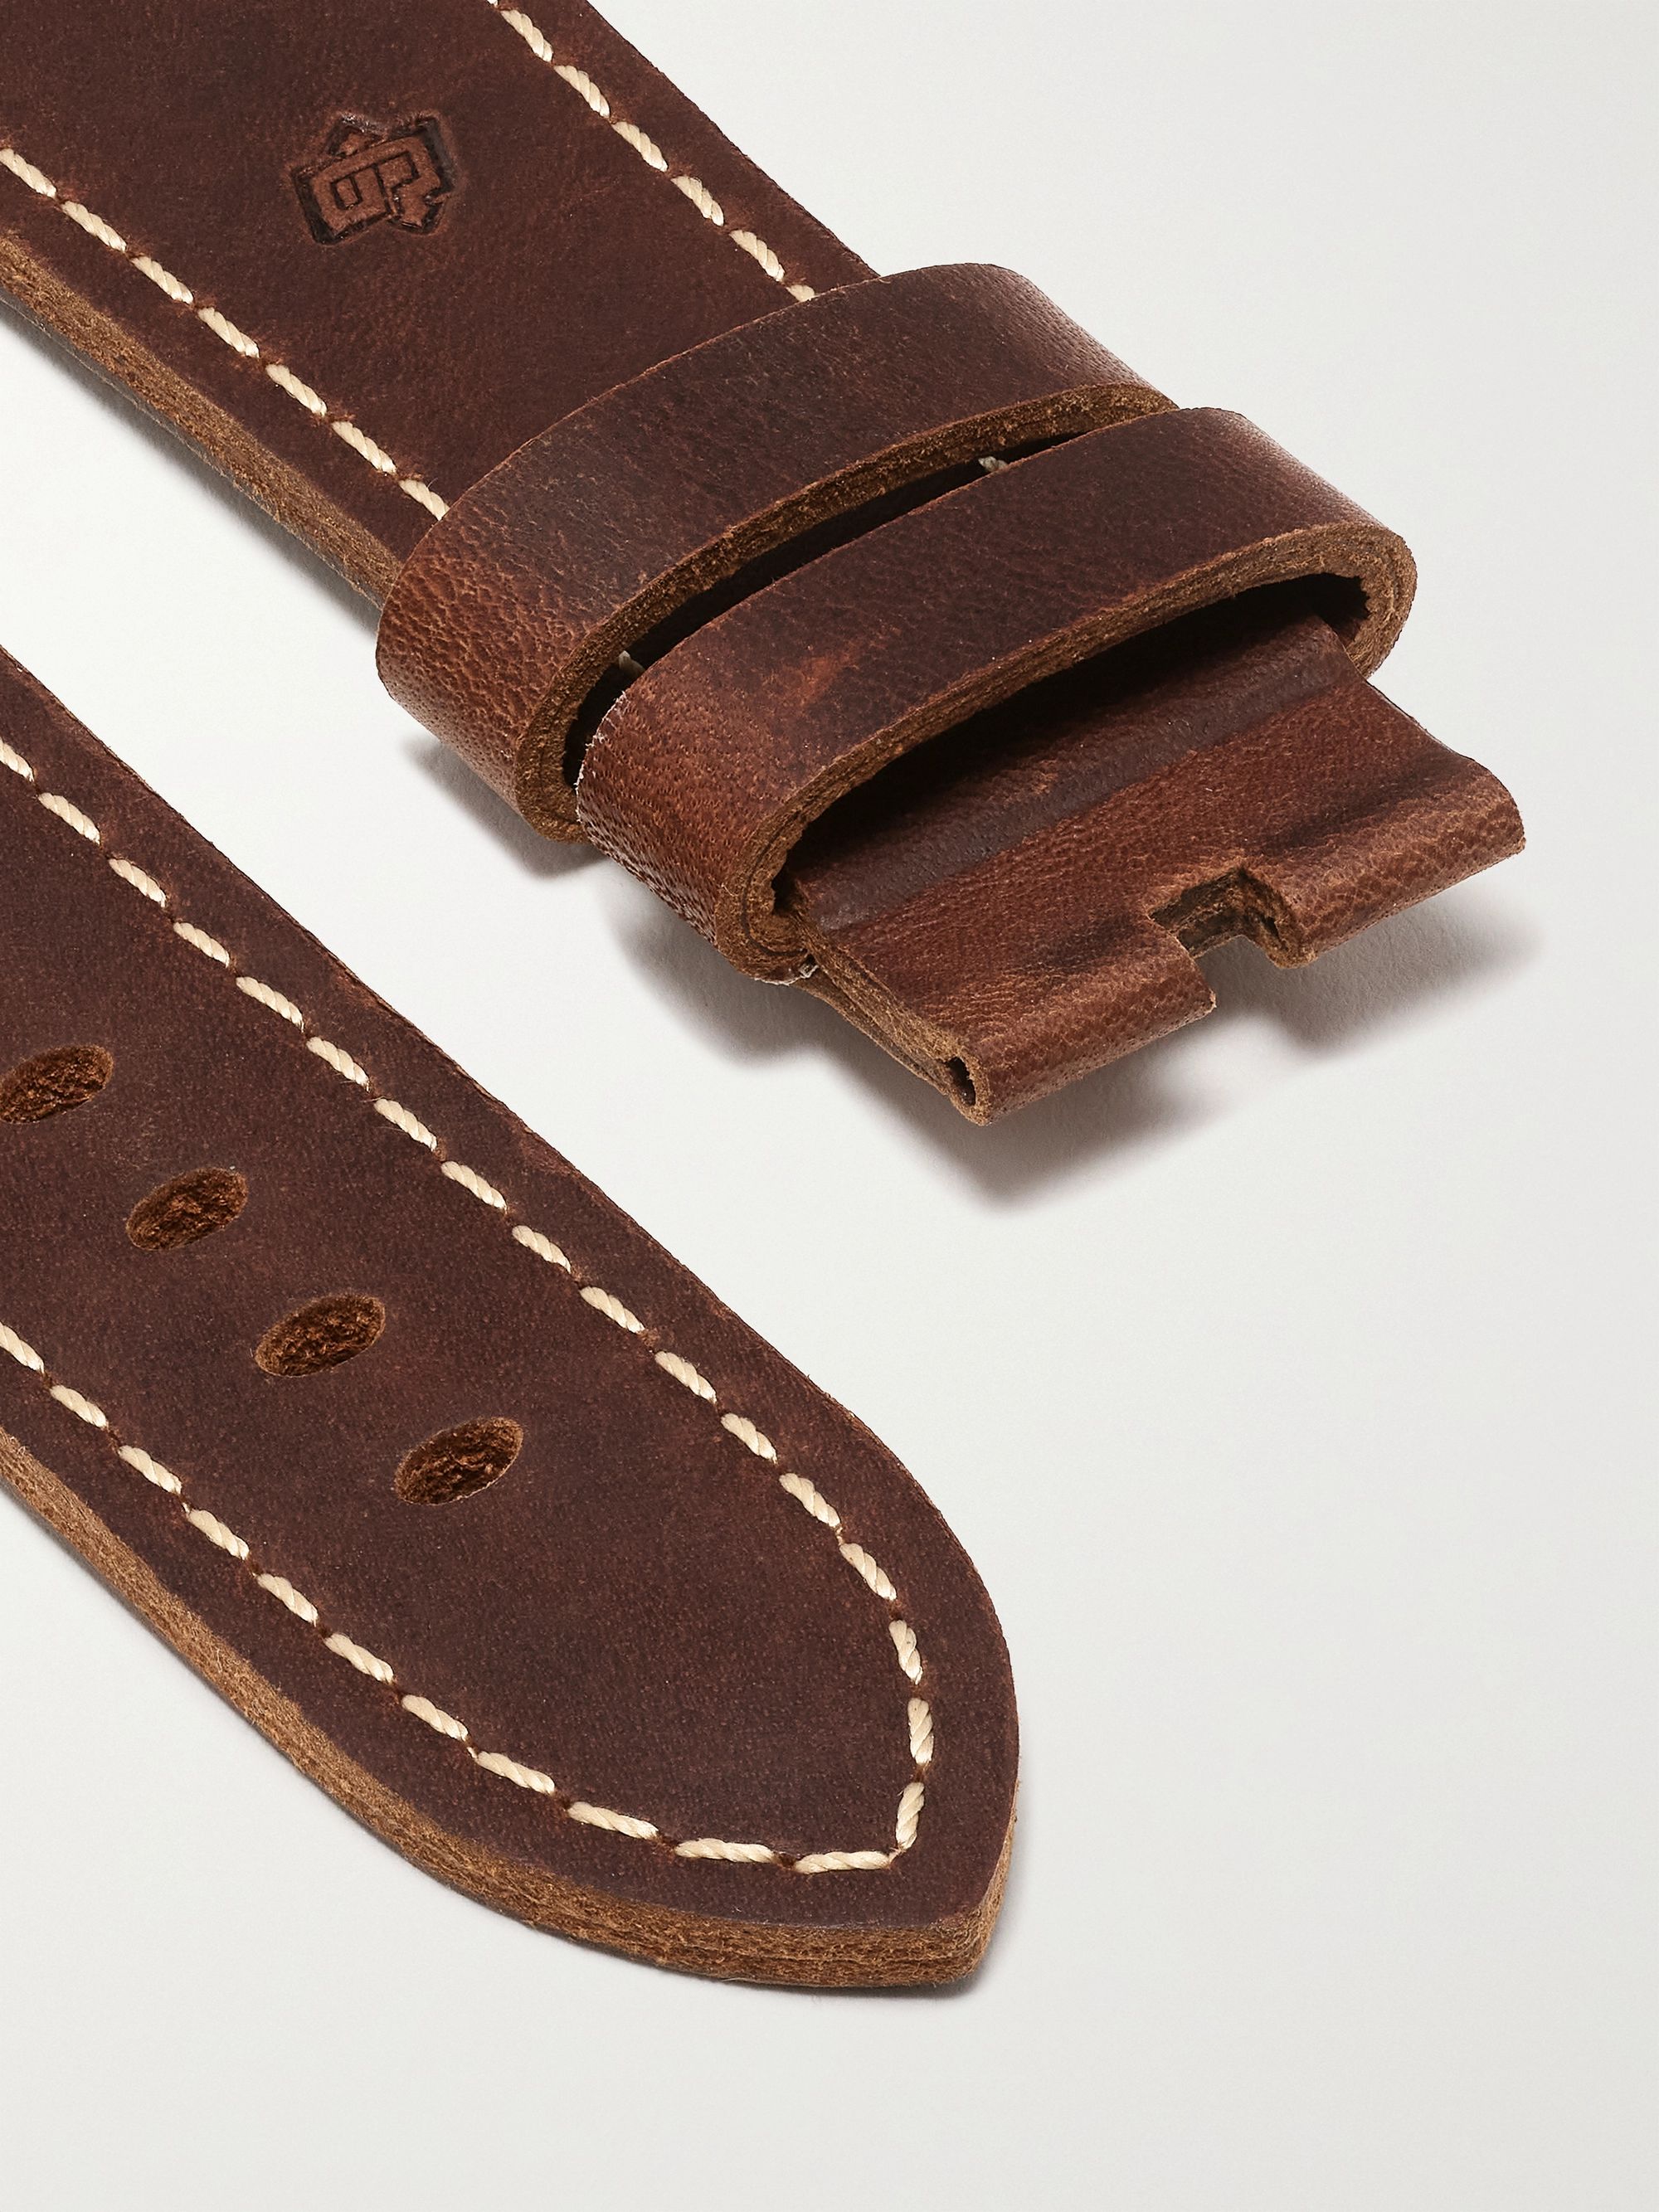 PANERAI 22mm Topstitched Leather Watch Strap